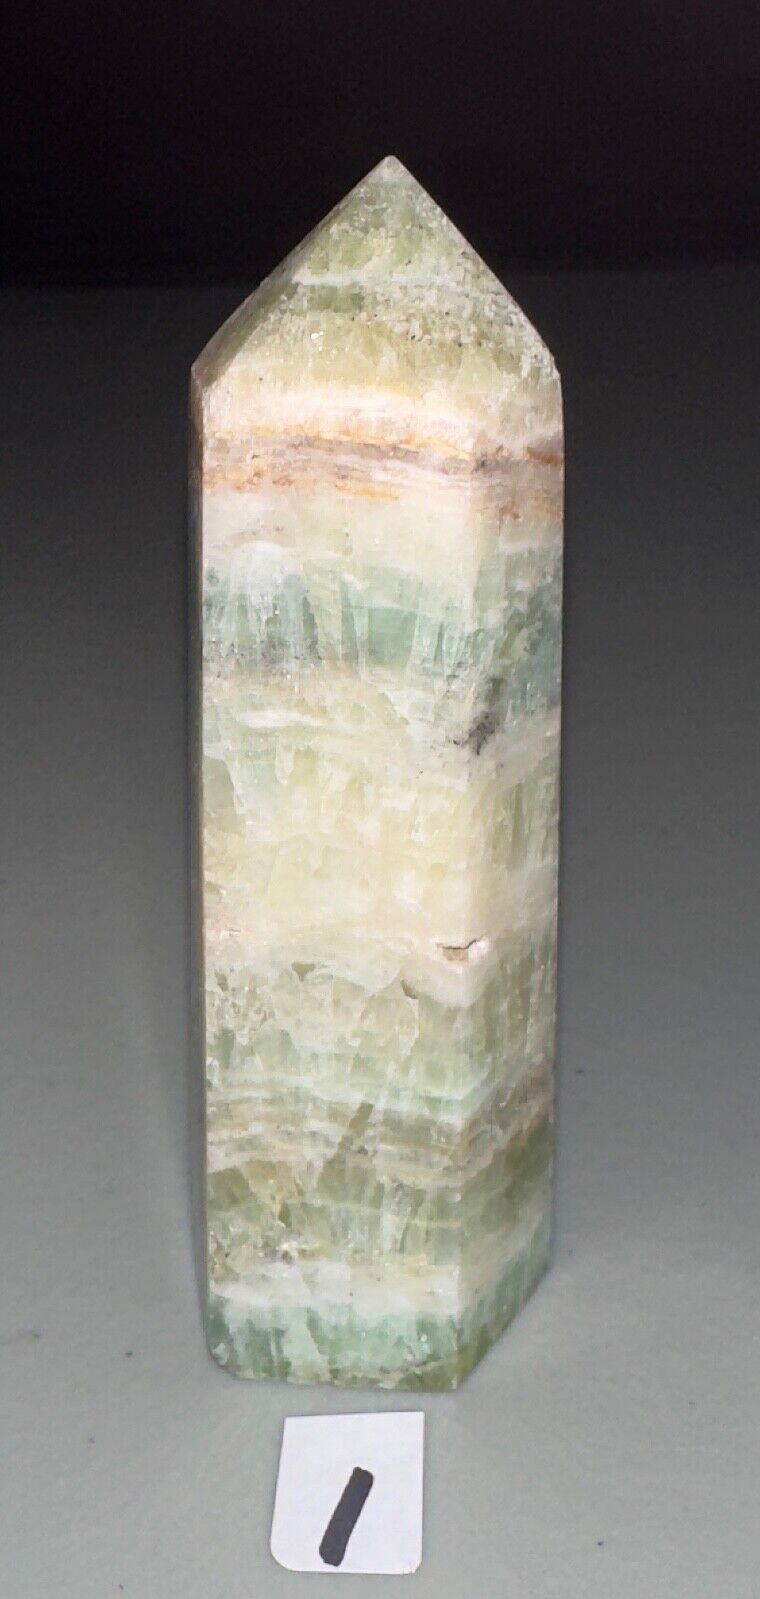 Green Calcite Tower,Quartz Crystal,Metaphysical,Reiki,Decor, Unique Gift